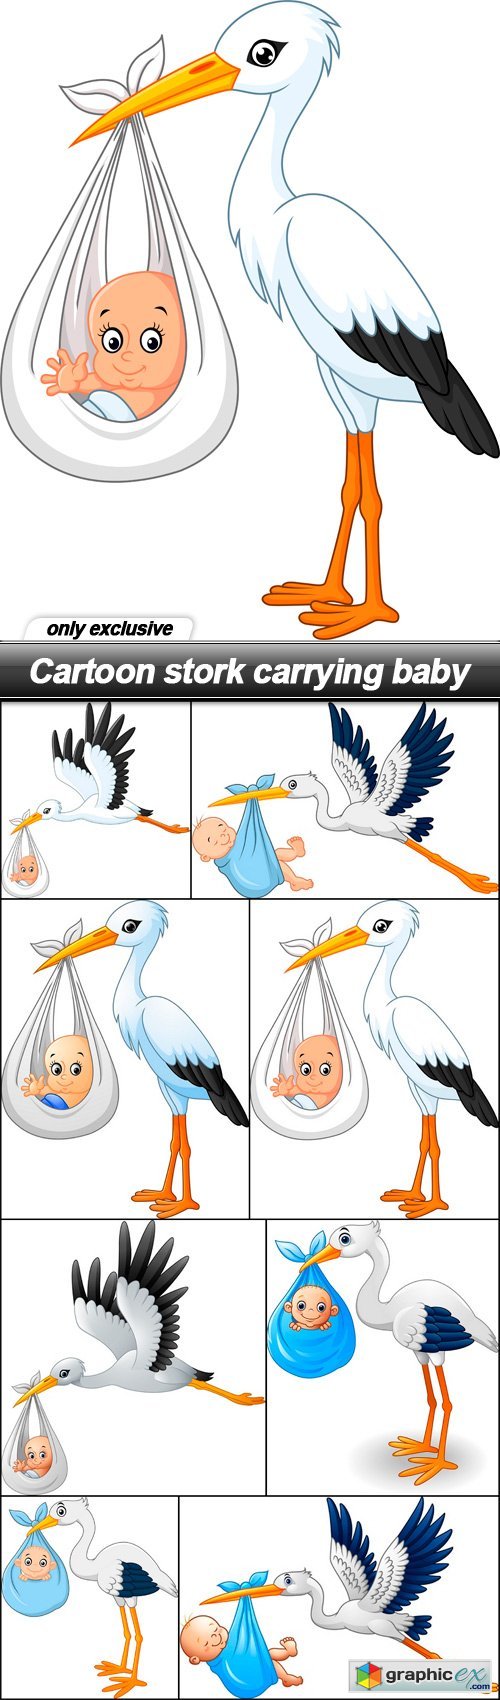 Cartoon stork carrying baby - 8 EPS